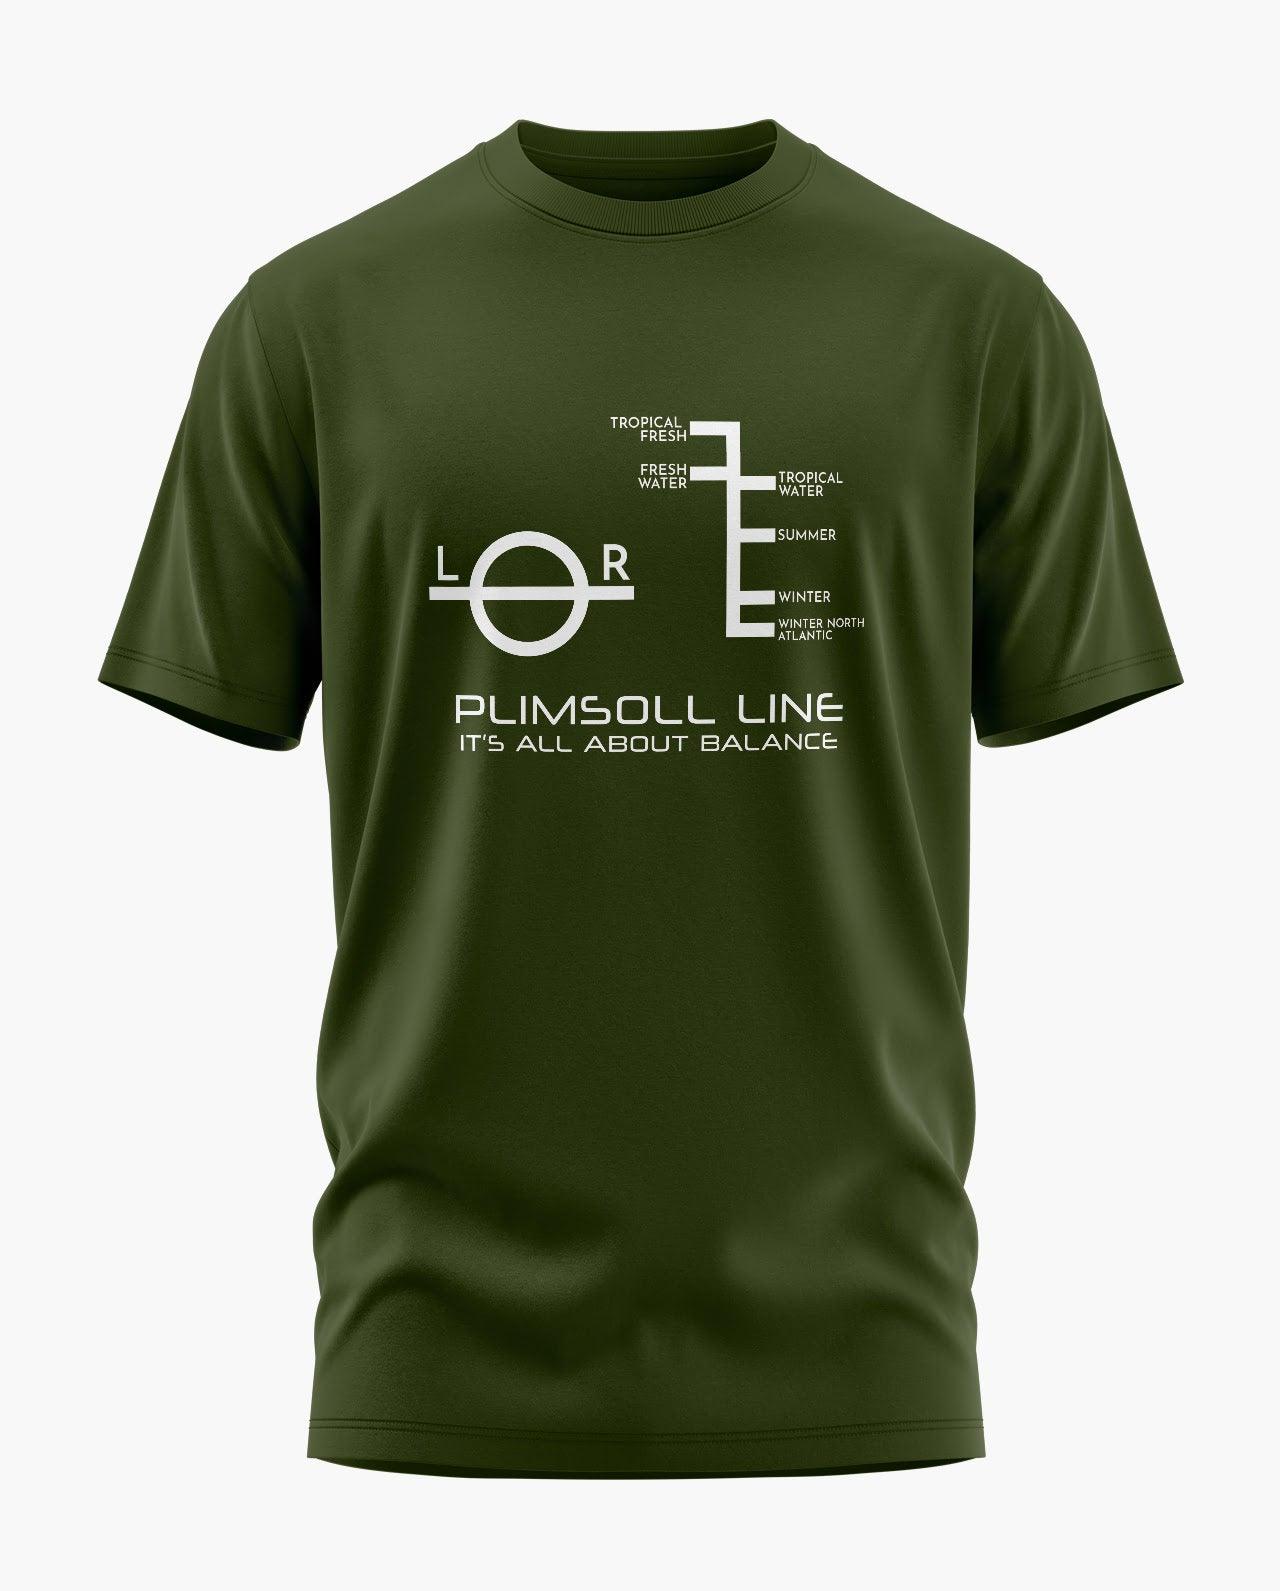 Plimsoll Line T-Shirt - Aero Armour